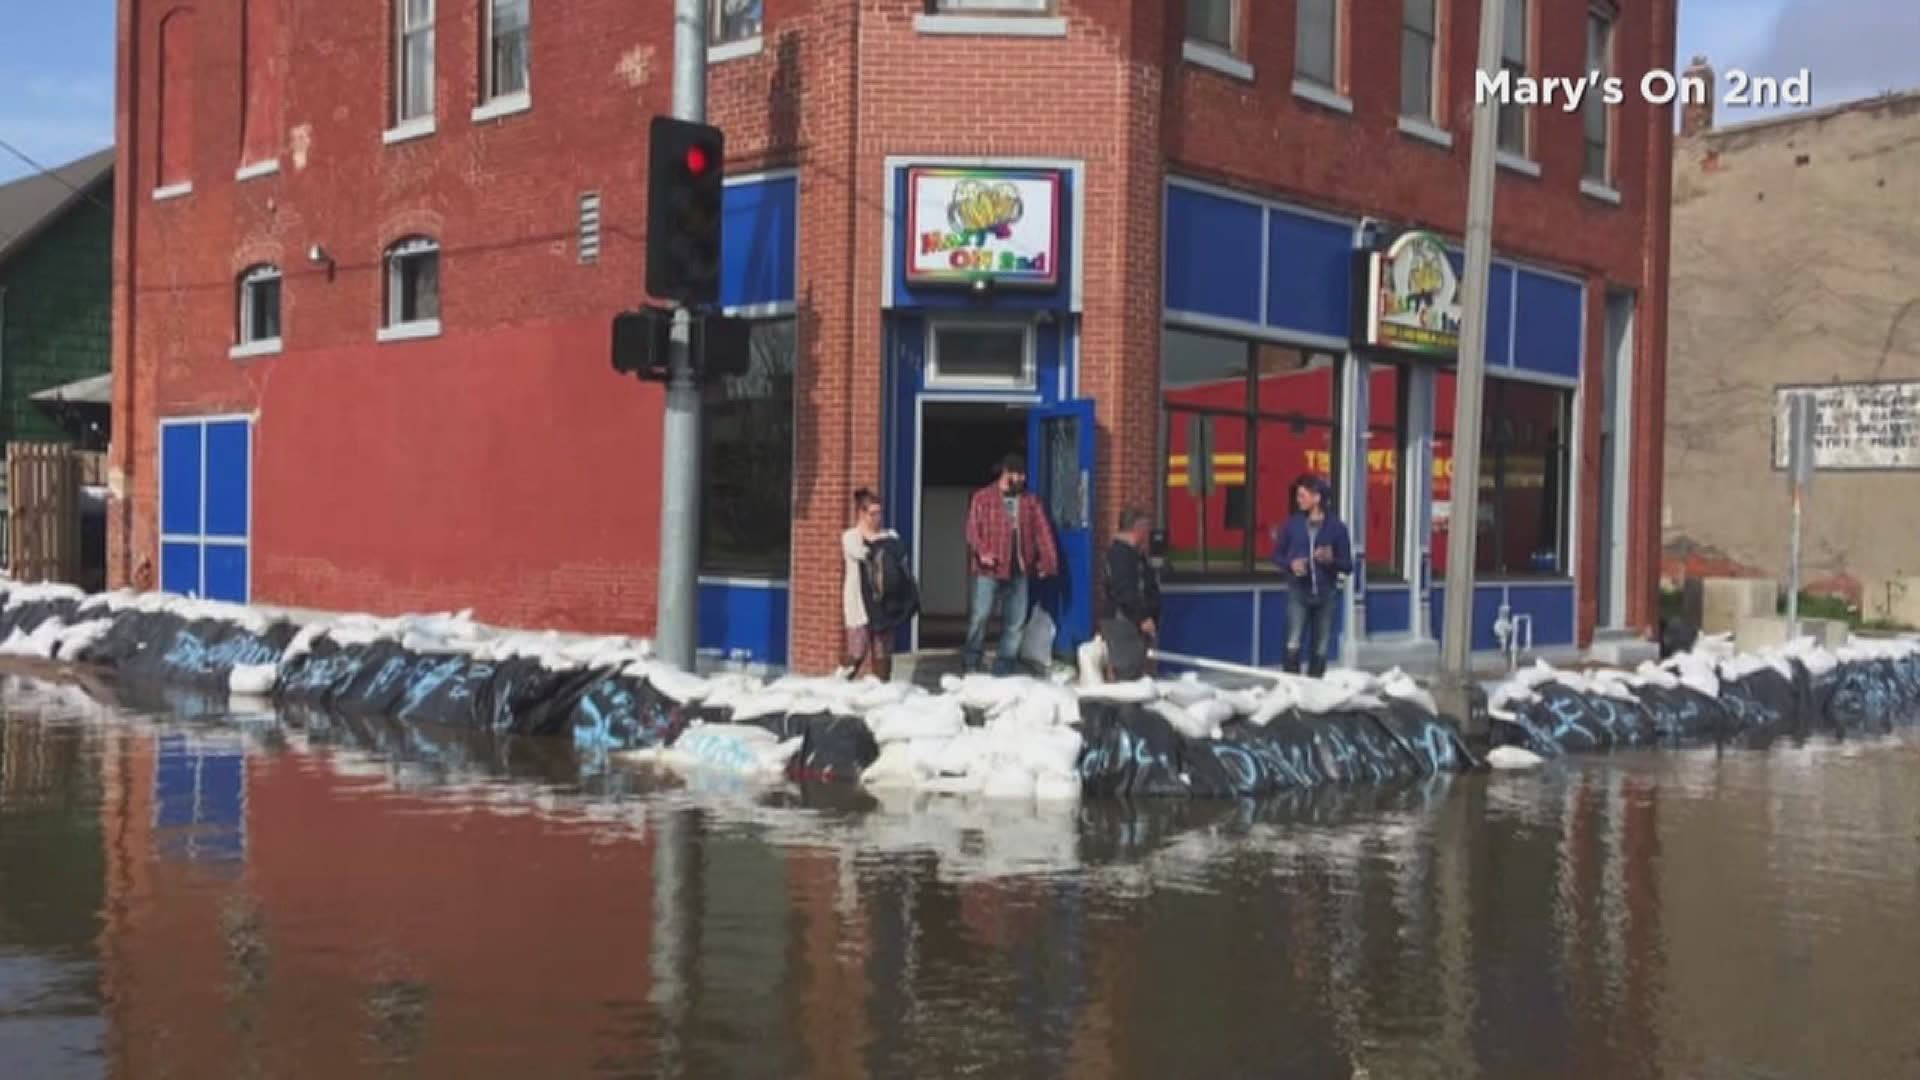 The City of Davenport awarded massive savings on flood insurance premiums